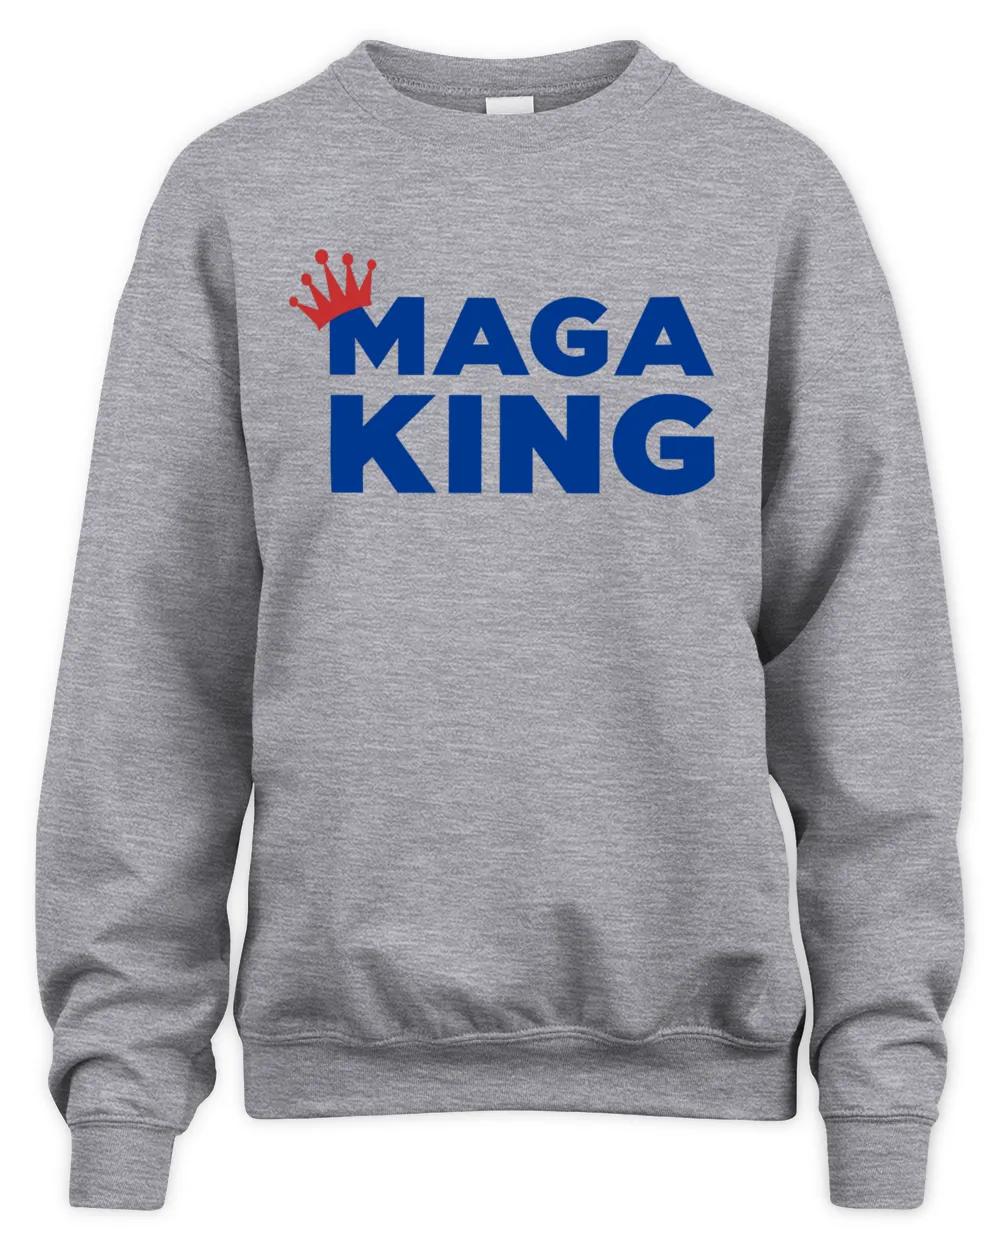 Ron Filipkowski Maga King Shirt Unisex Sweatshirt sport-grey 